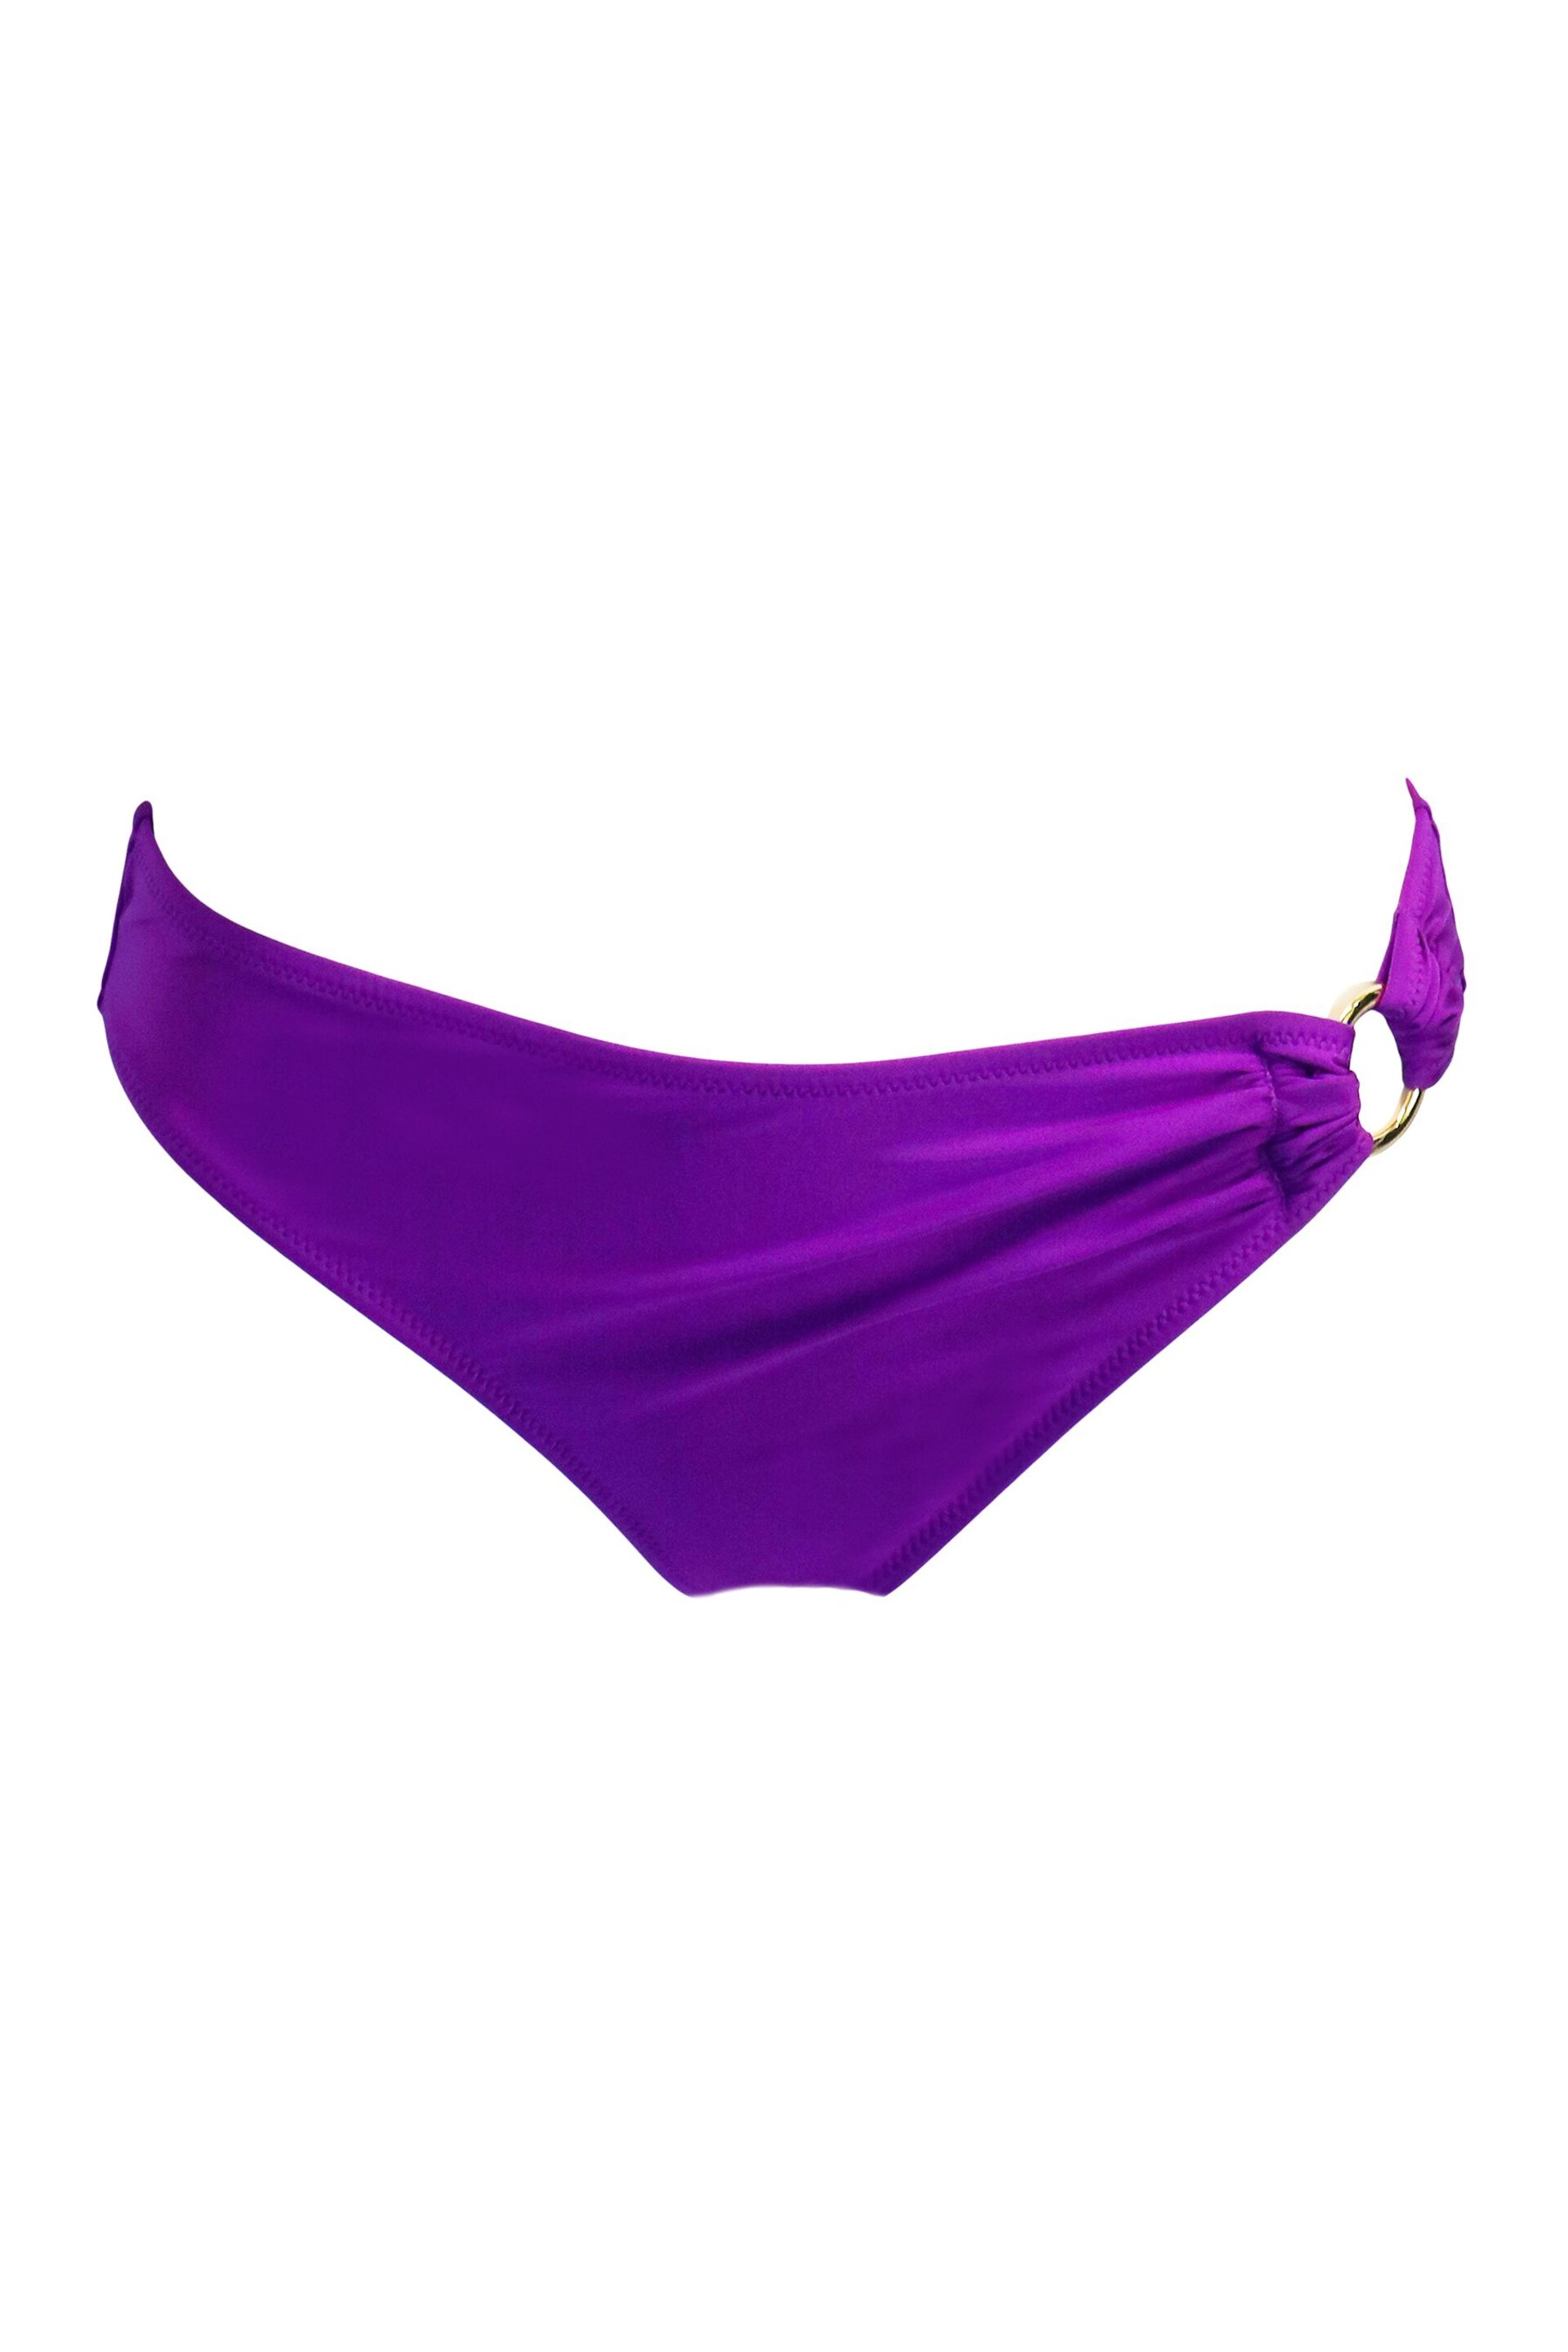 Pour Moi Purple Samoa Ring Detail Bikini Bottoms - Image 4 of 5